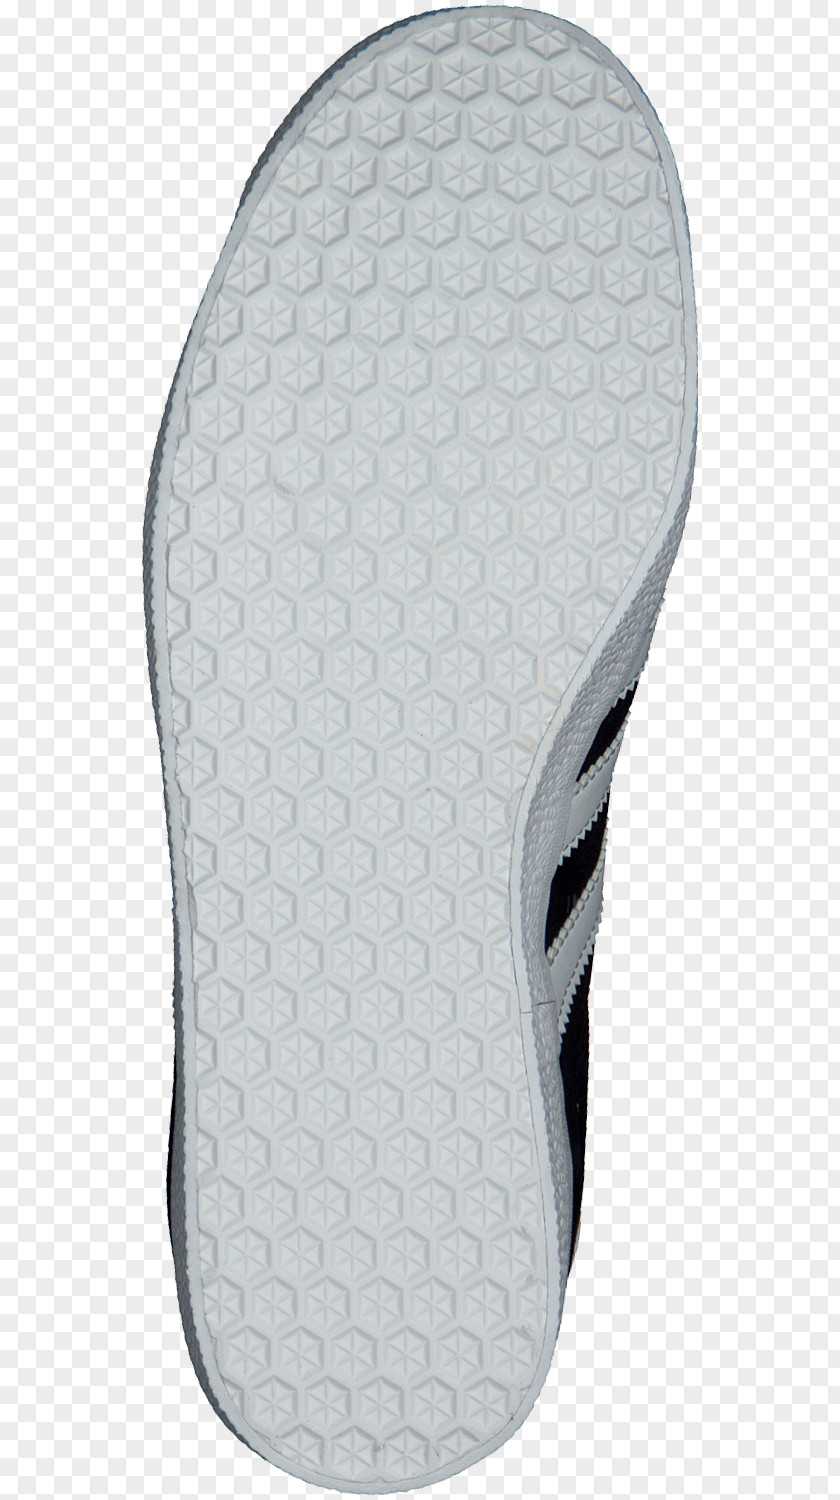 Gazelle Shoe Flip-flops Footwear Adidas Sneakers PNG